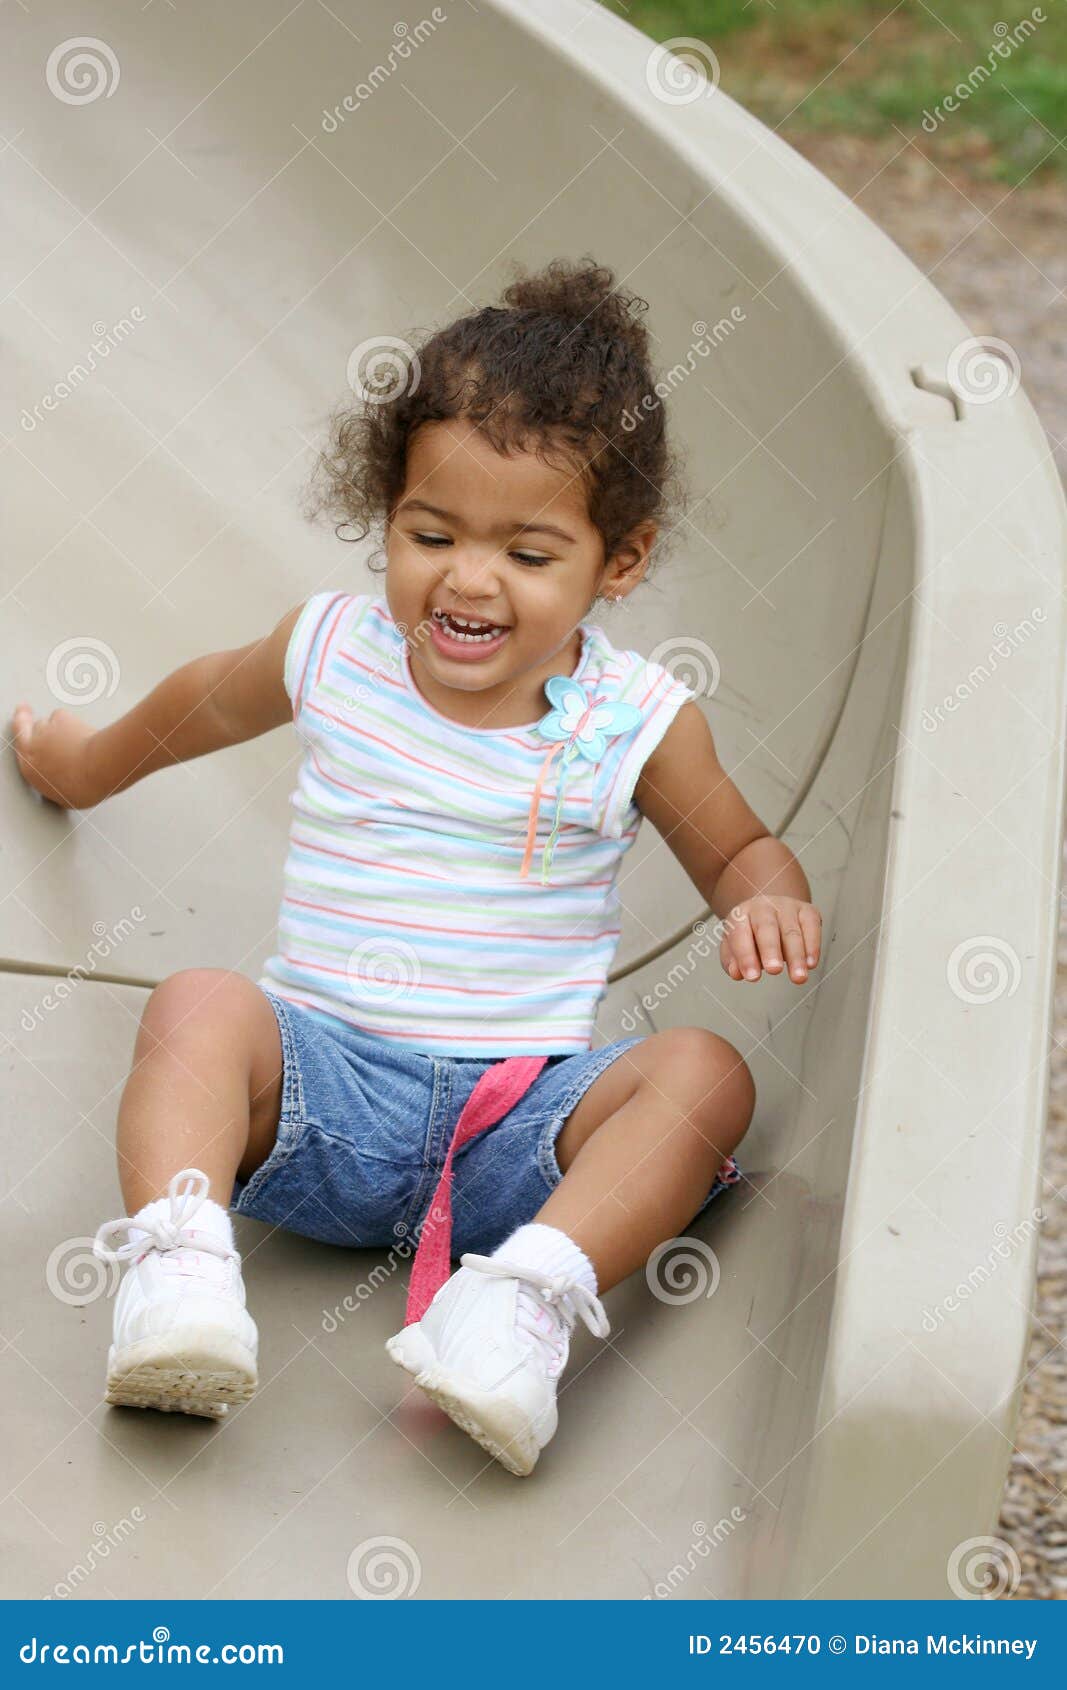 Playground Slide Royalty Free Stock Image 71482078